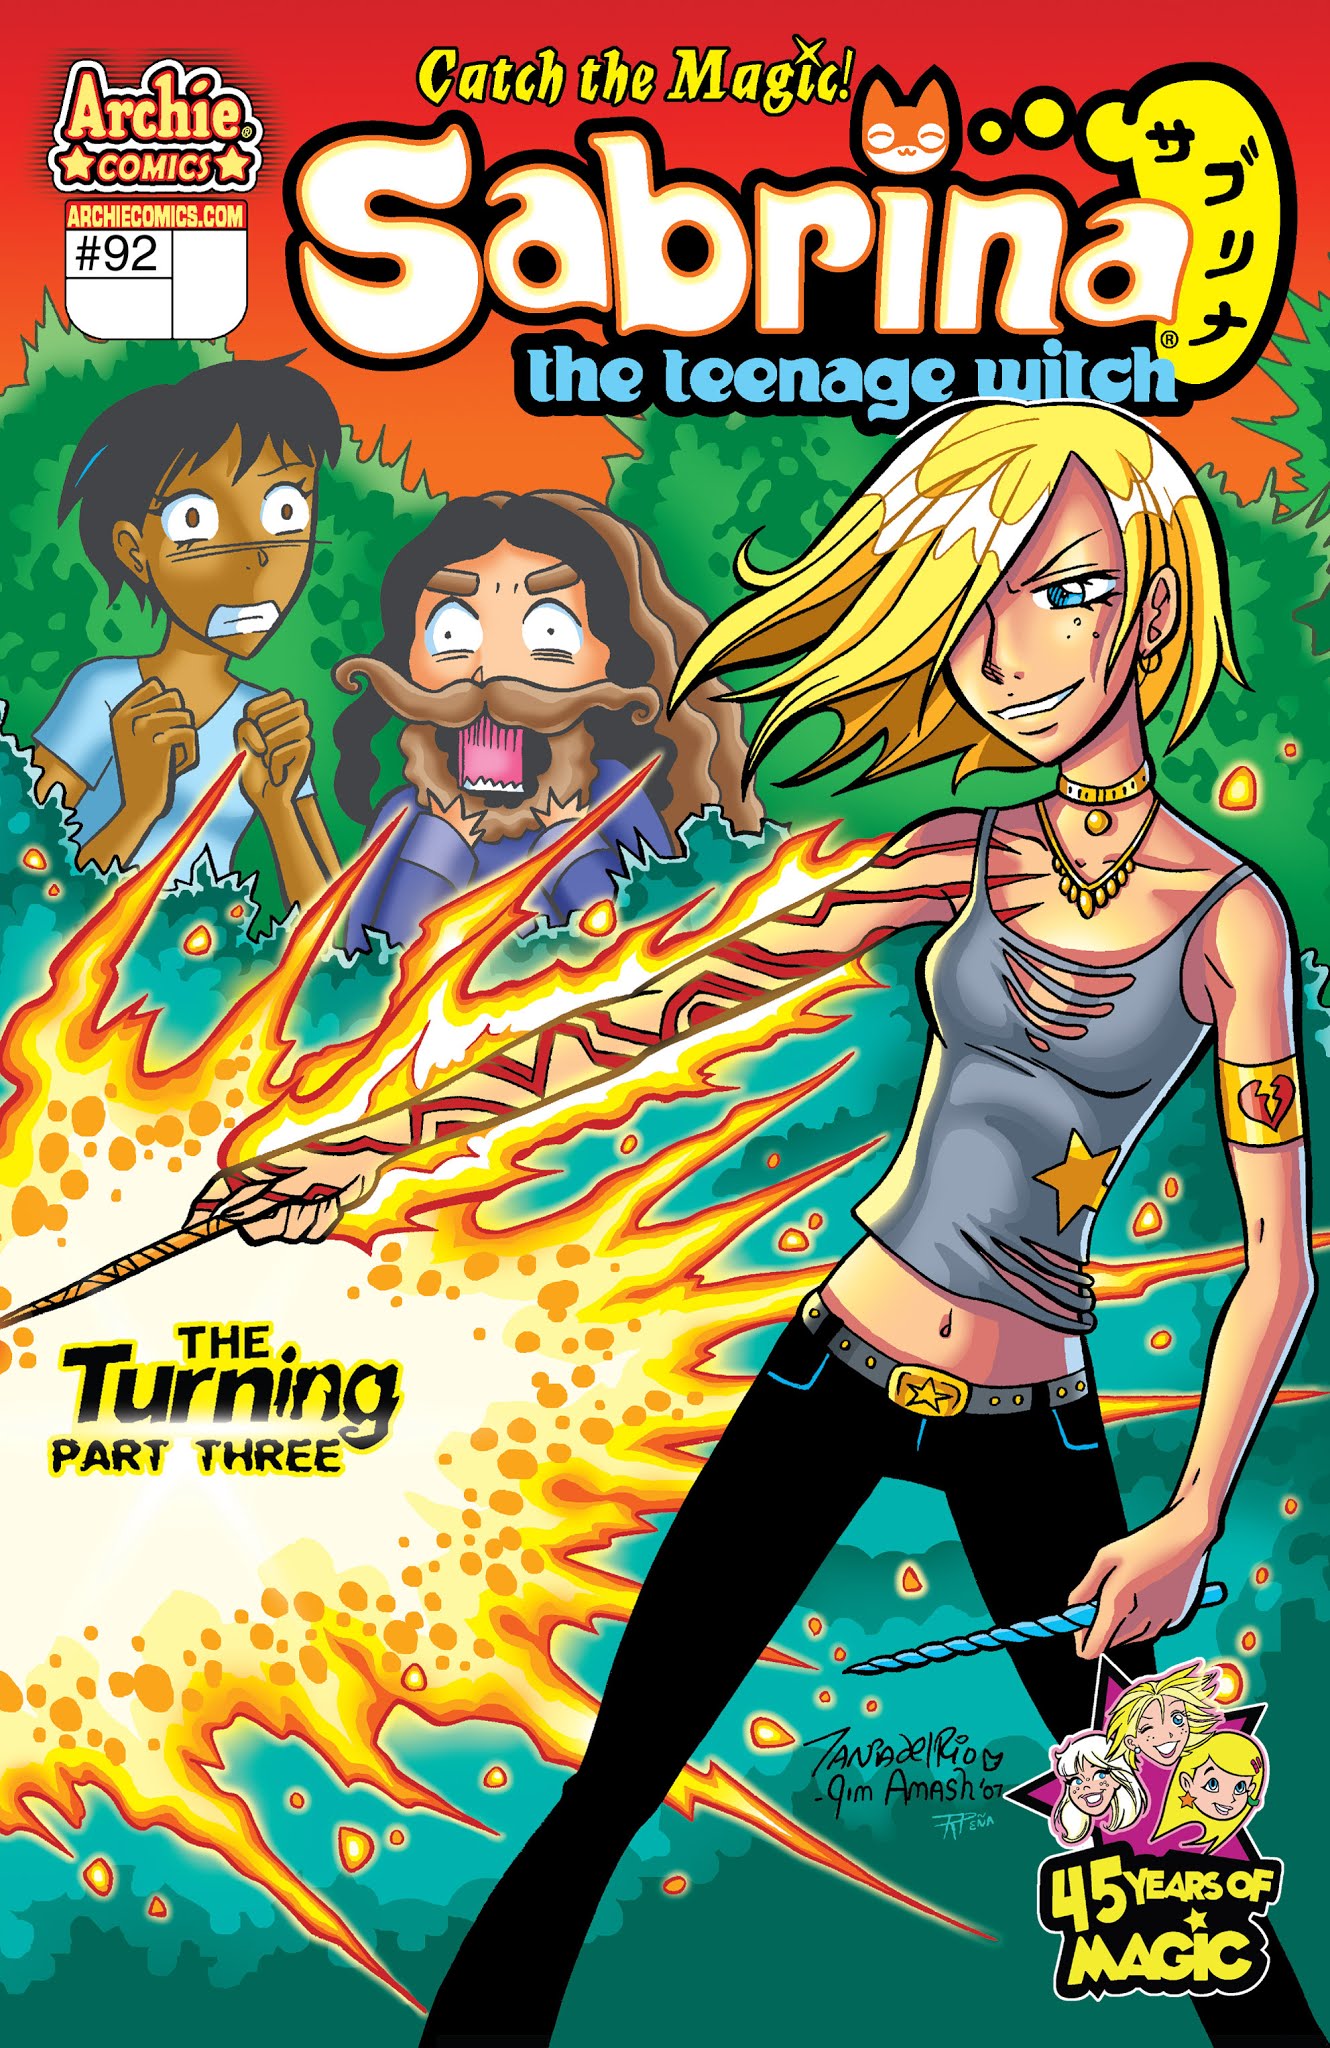 Sabrina The Teenage Witch 2000 Issue 92 | Read Sabrina The Teenage Witch  2000 Issue 92 comic online in high quality. Read Full Comic online for free  - Read comics online in high quality .